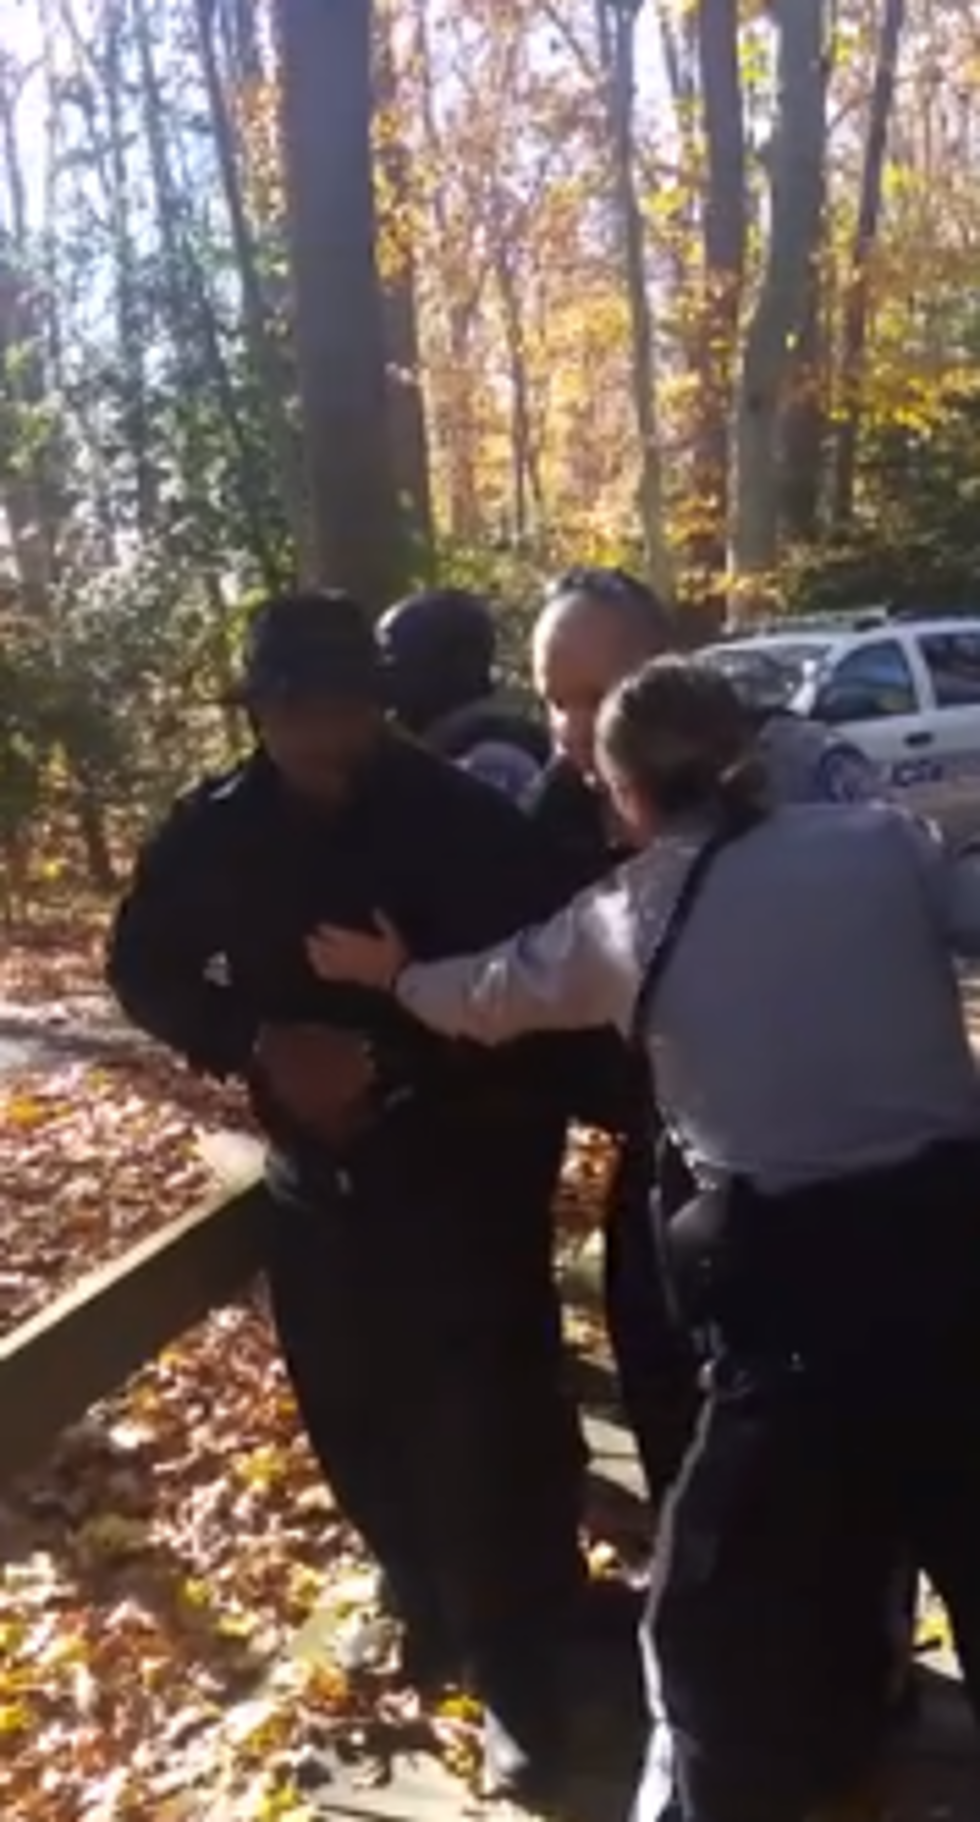 WATCH: Did Brookdale cops overreact in arresting nursing student?